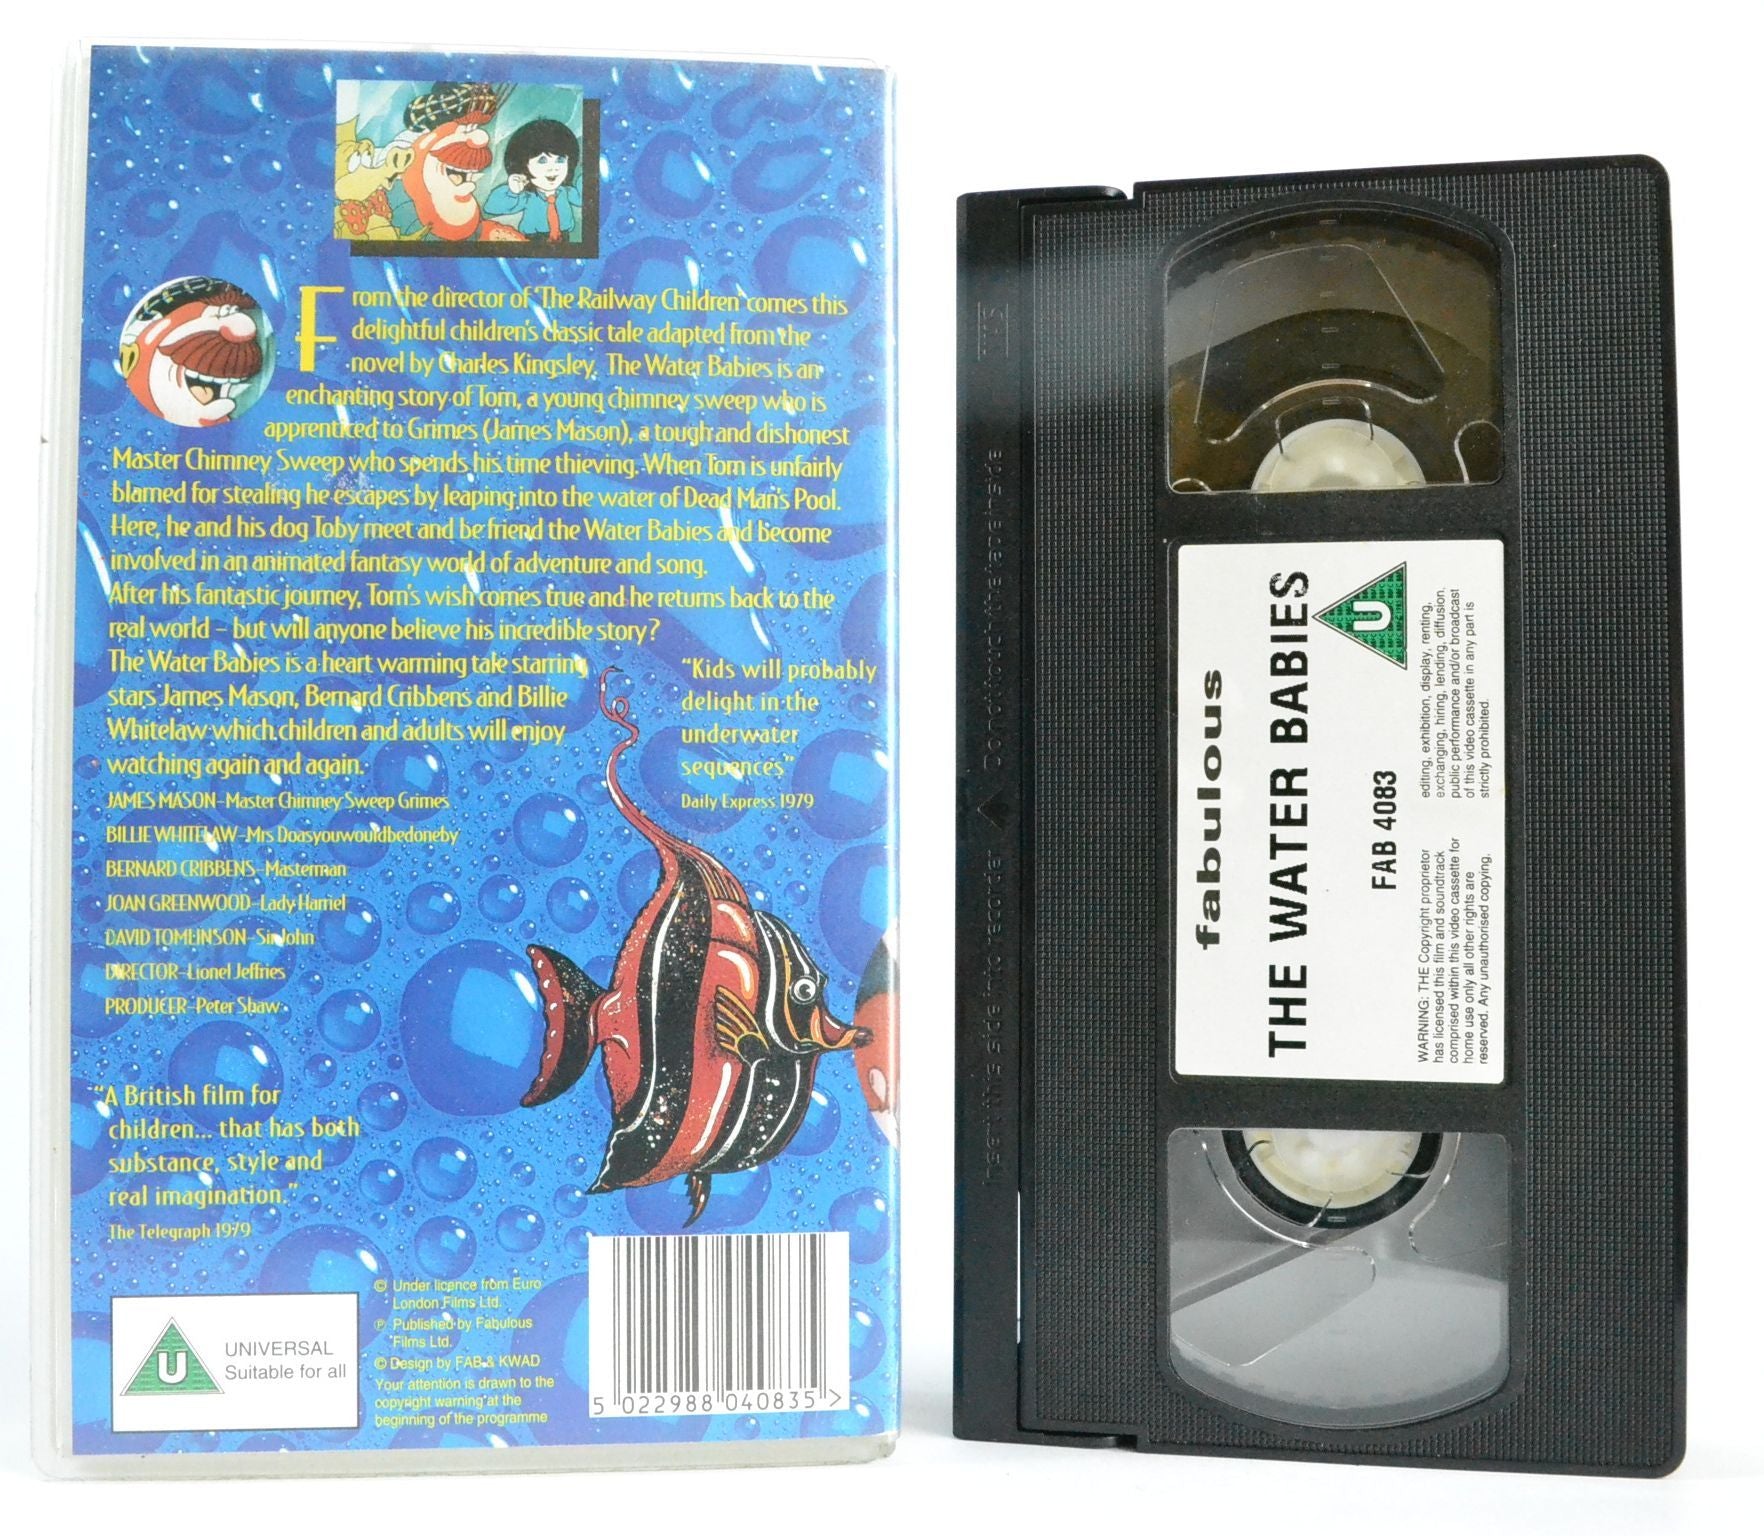 The Water Babies: Charles Kingsley - James Mason (1979) Children’s Hit - VHS-